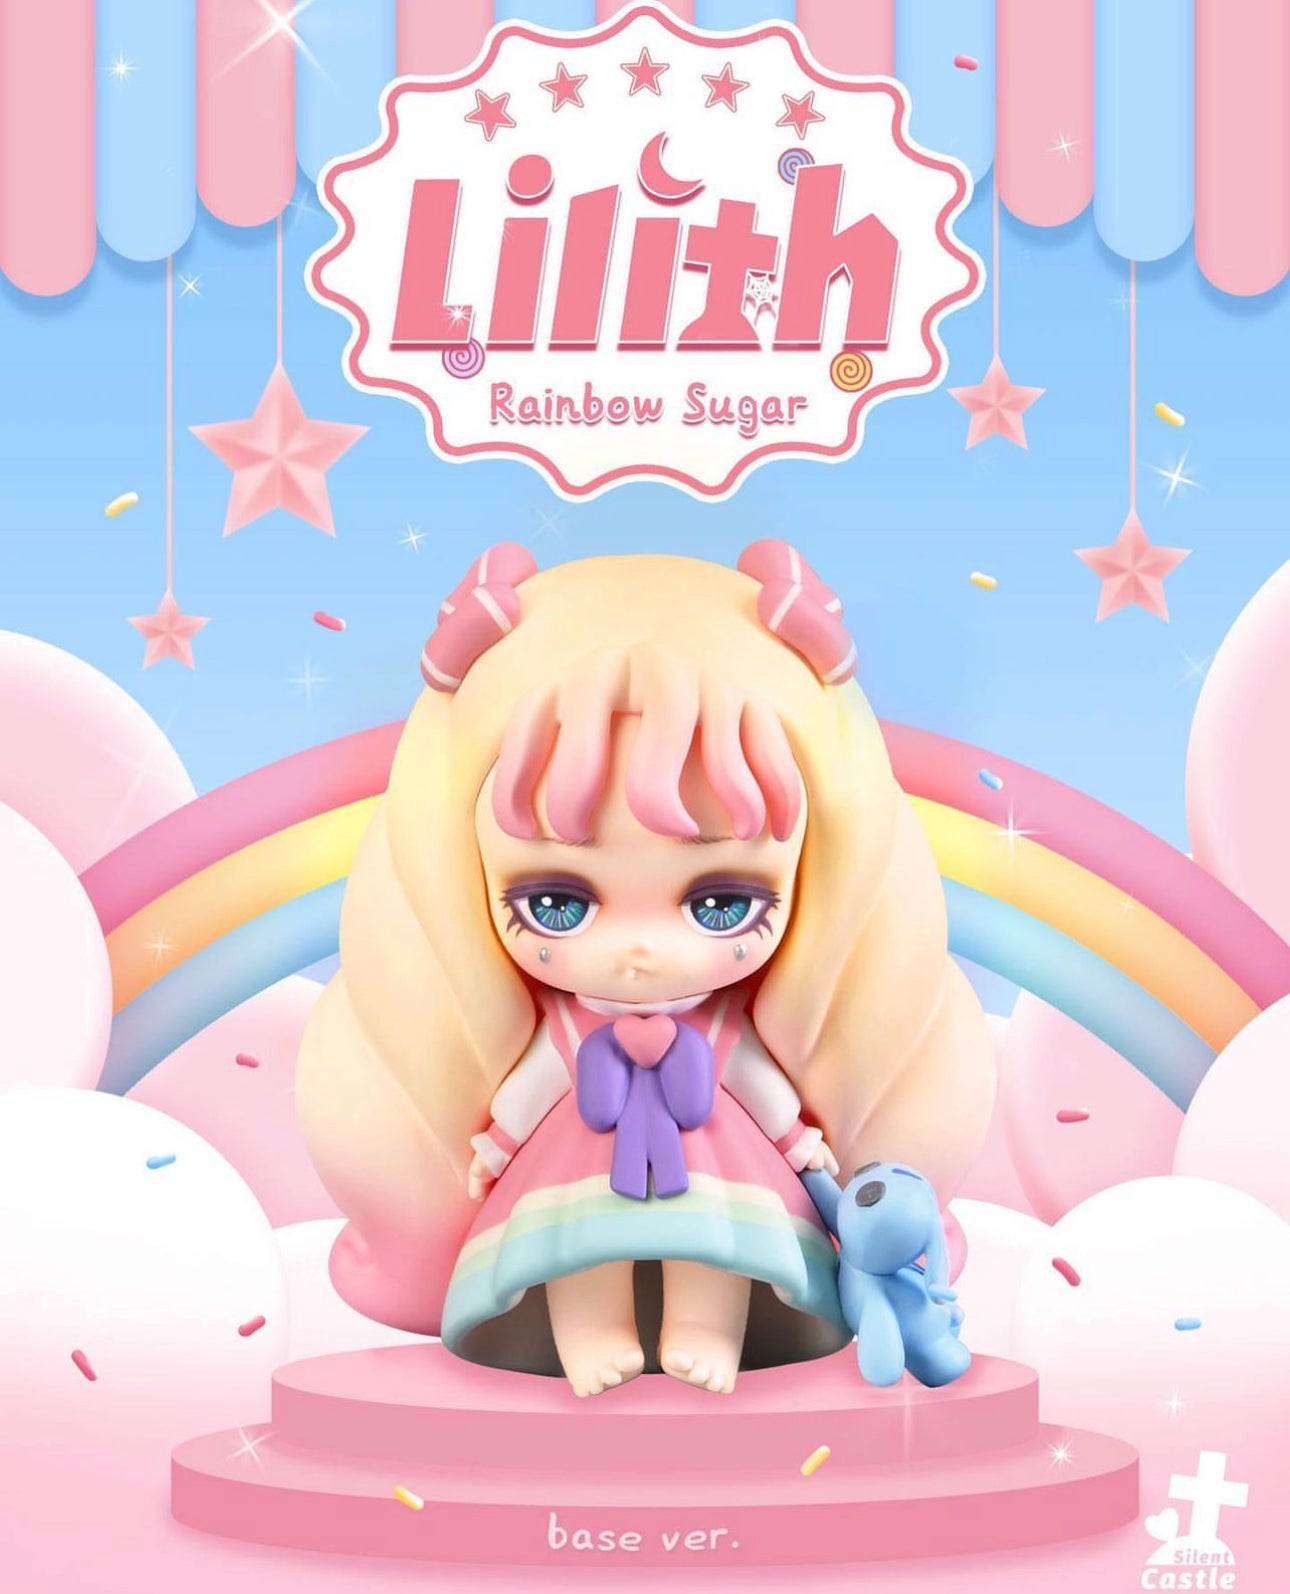 Lilith - Silent Castle Rainbow Sugar